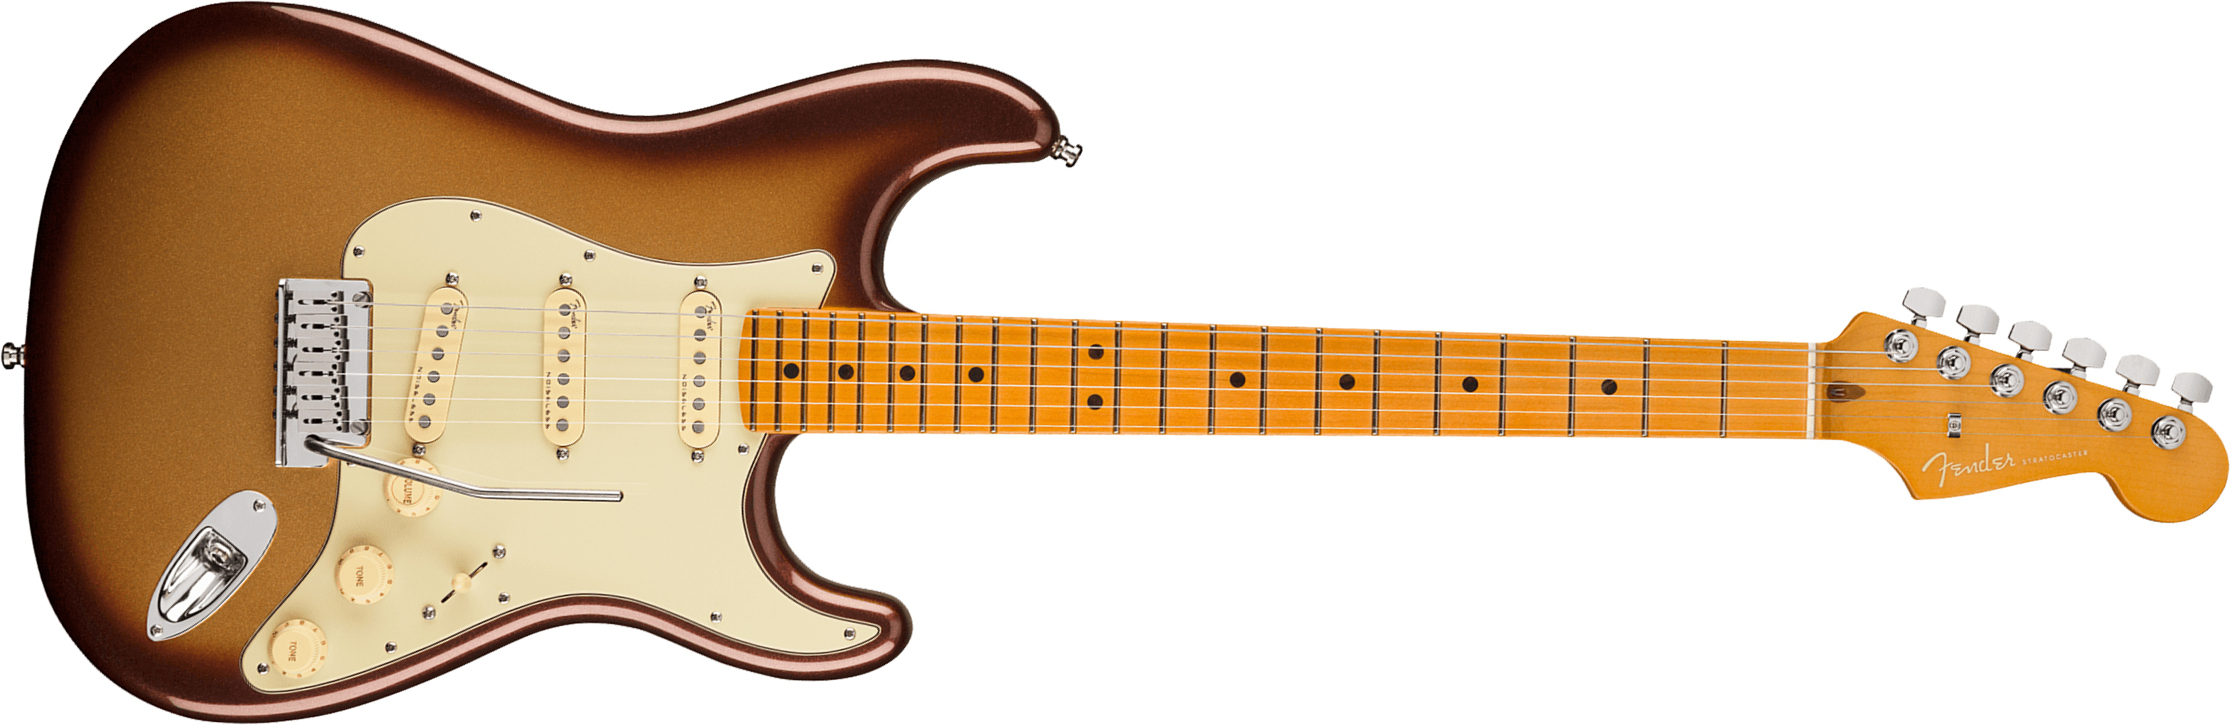 Fender Strat American Ultra 2019 Usa Mn - Mocha Burst - Str shape electric guitar - Main picture